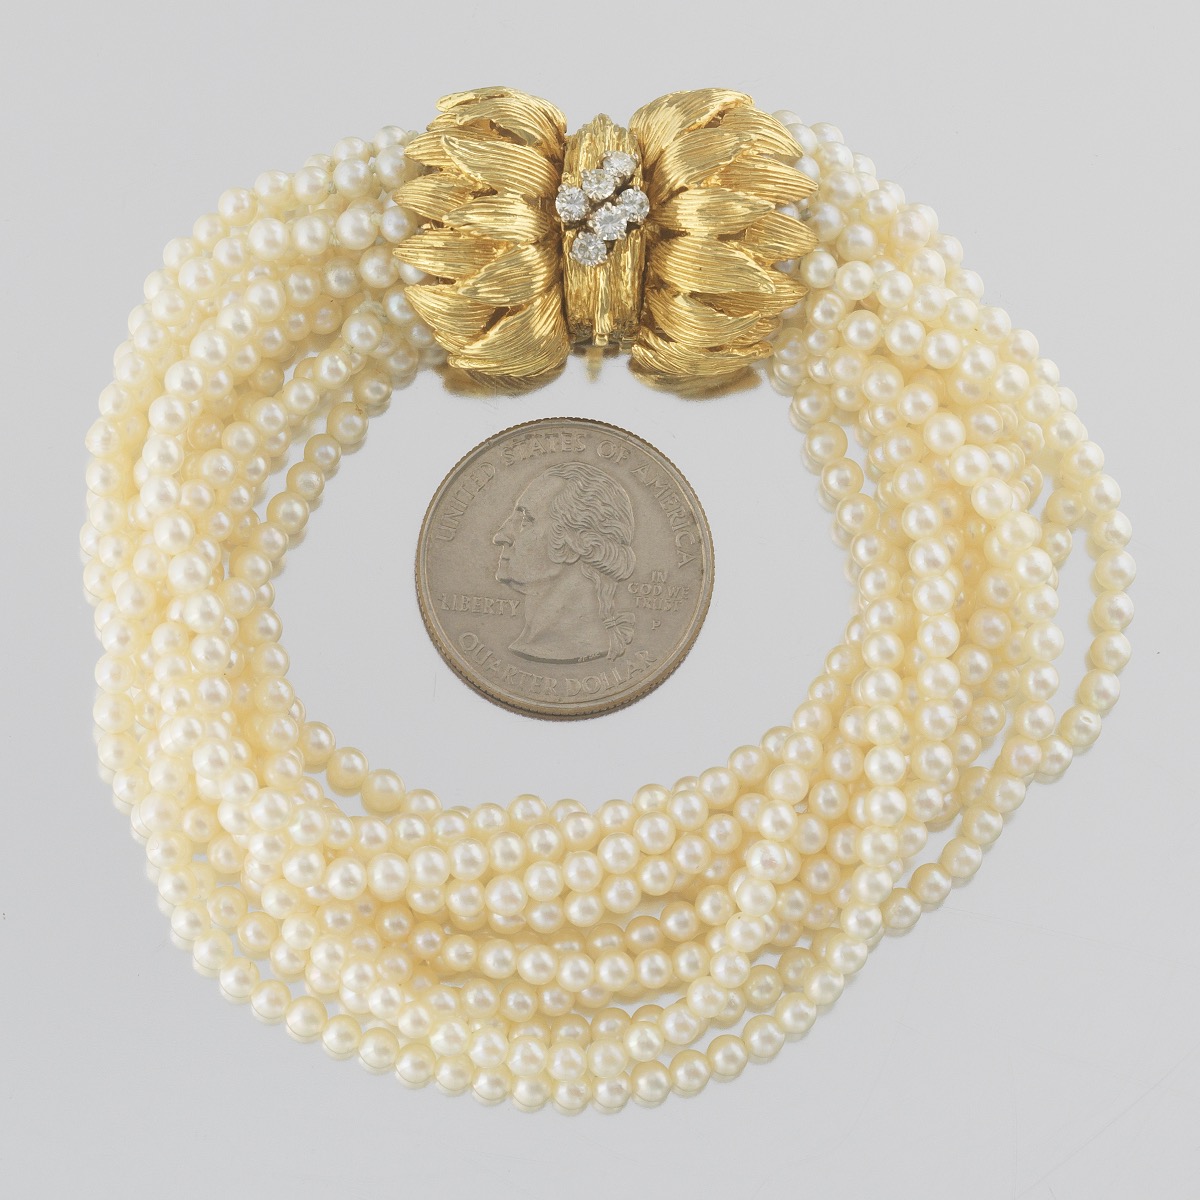 Ladies' 18k Gold and Diamond Bracelet - Image 2 of 6